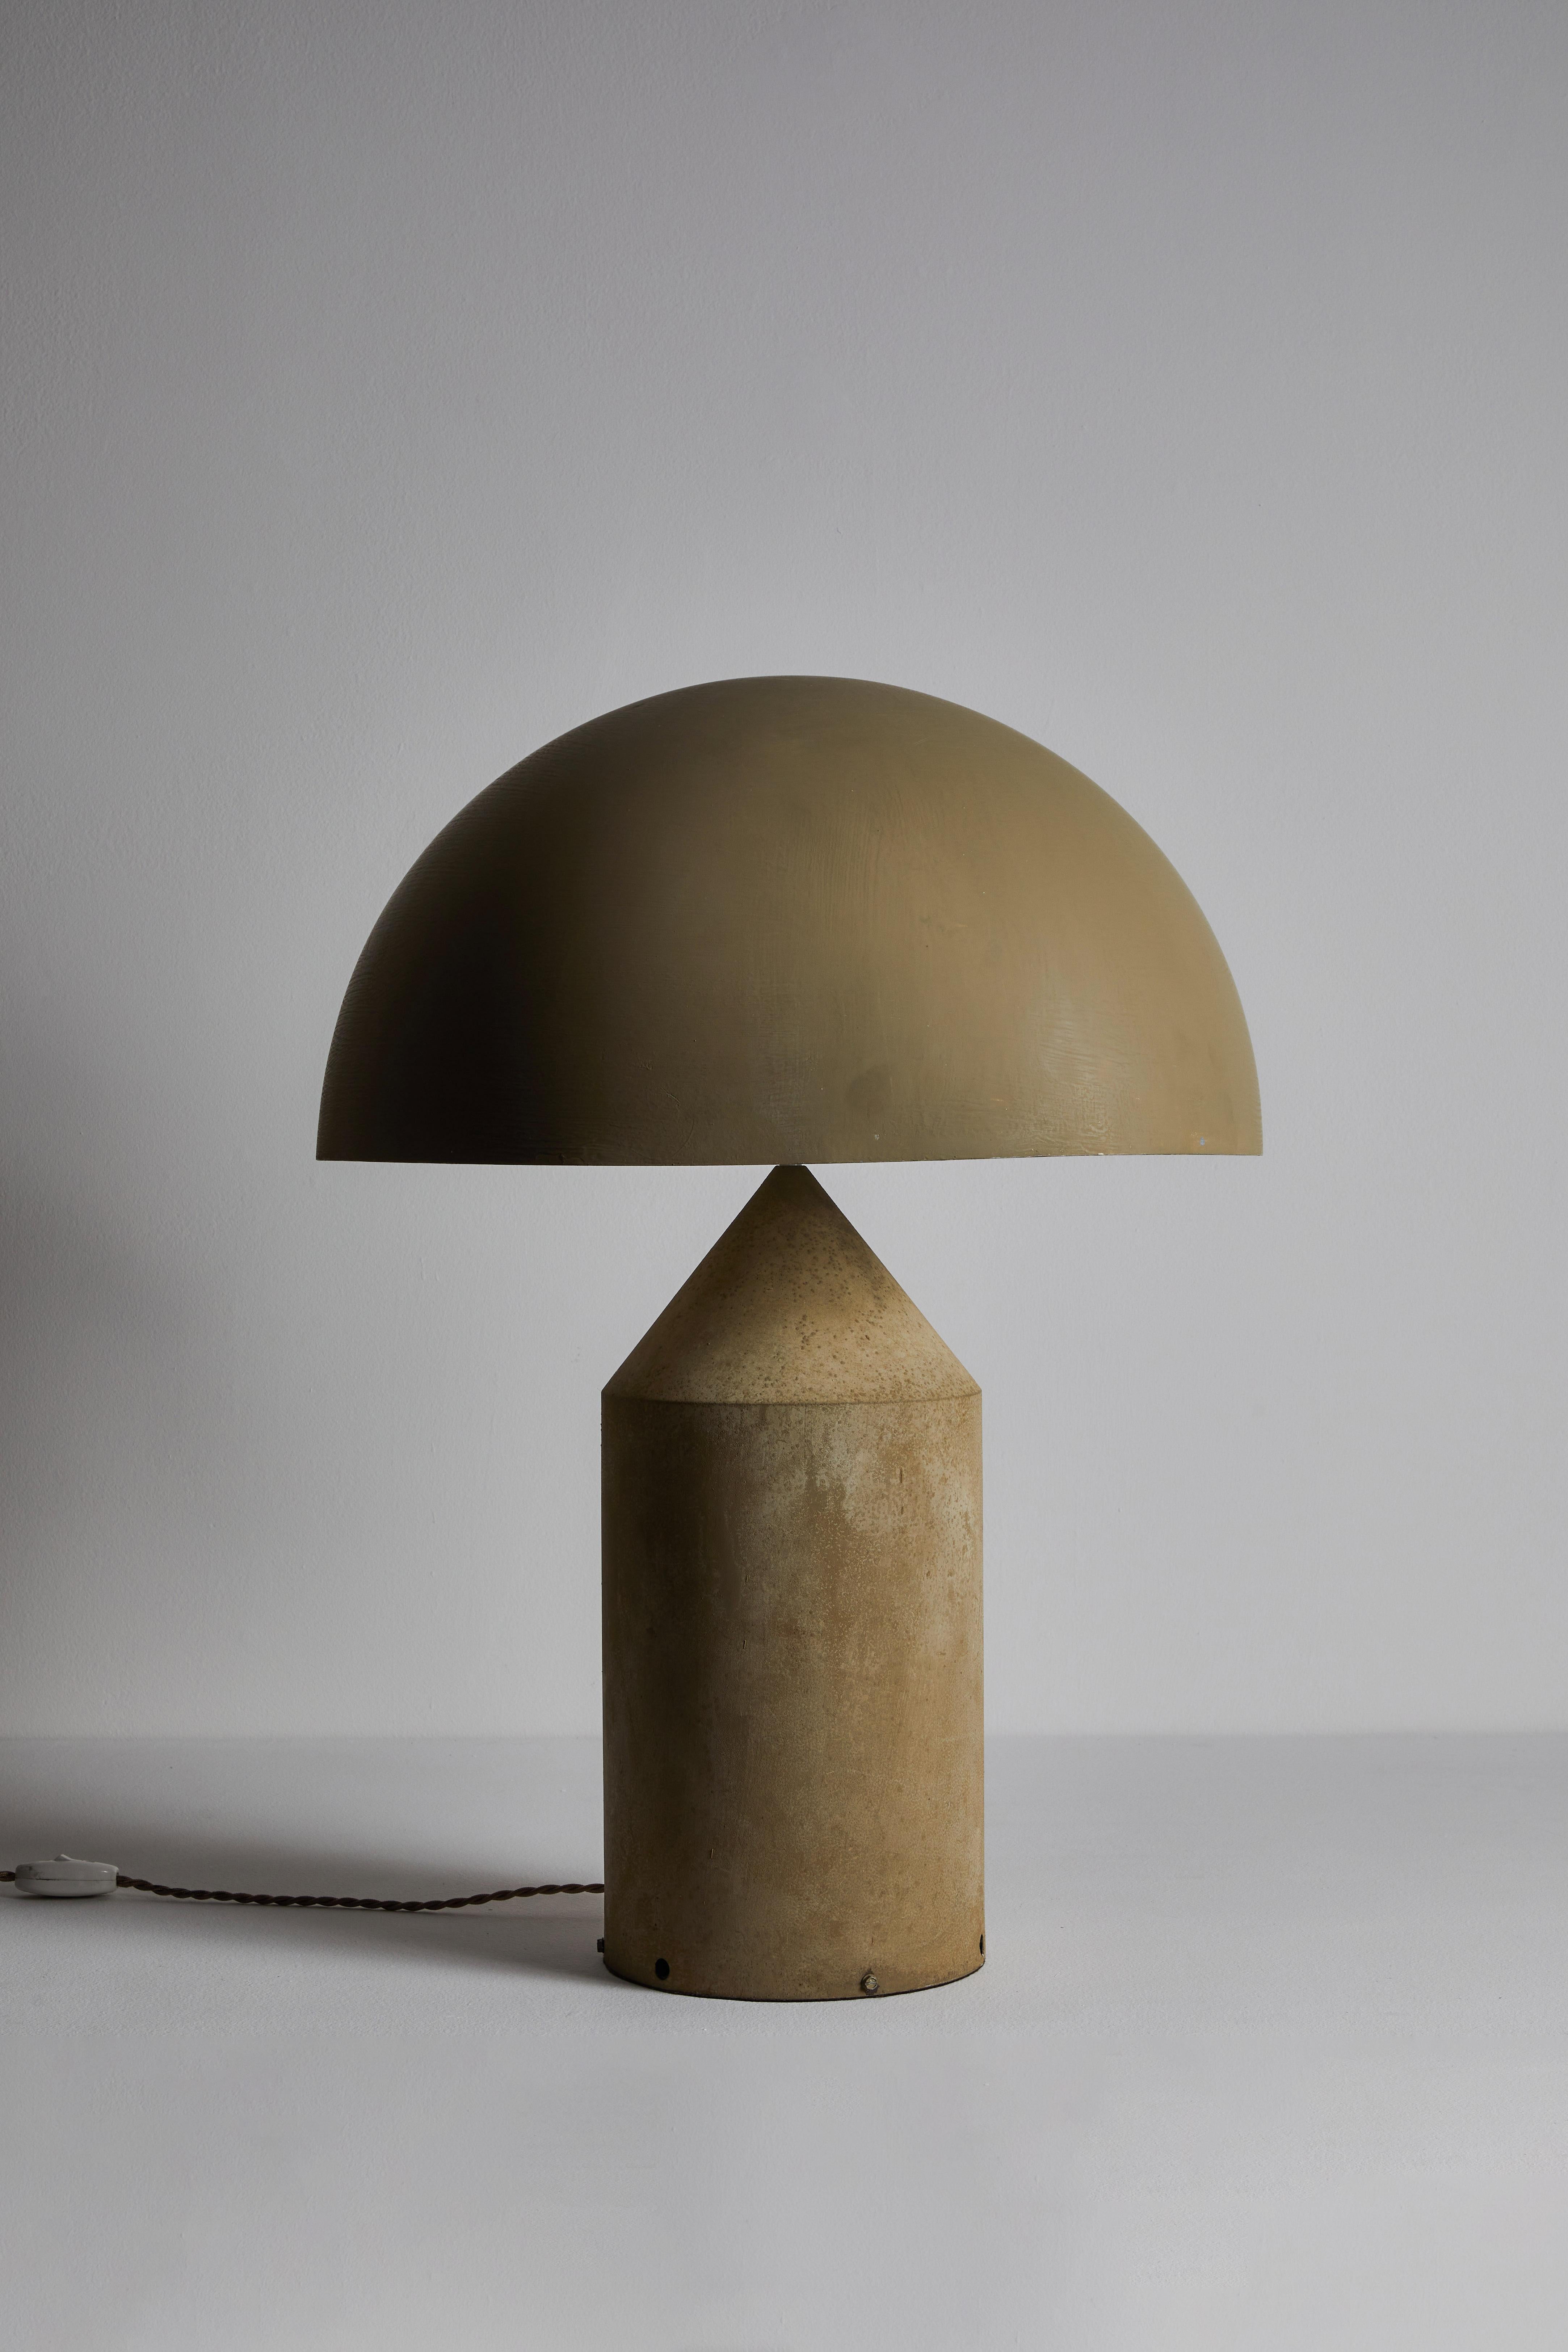 Italian Rare Atollo Table Lamp by Vico Magistretti for Oluce